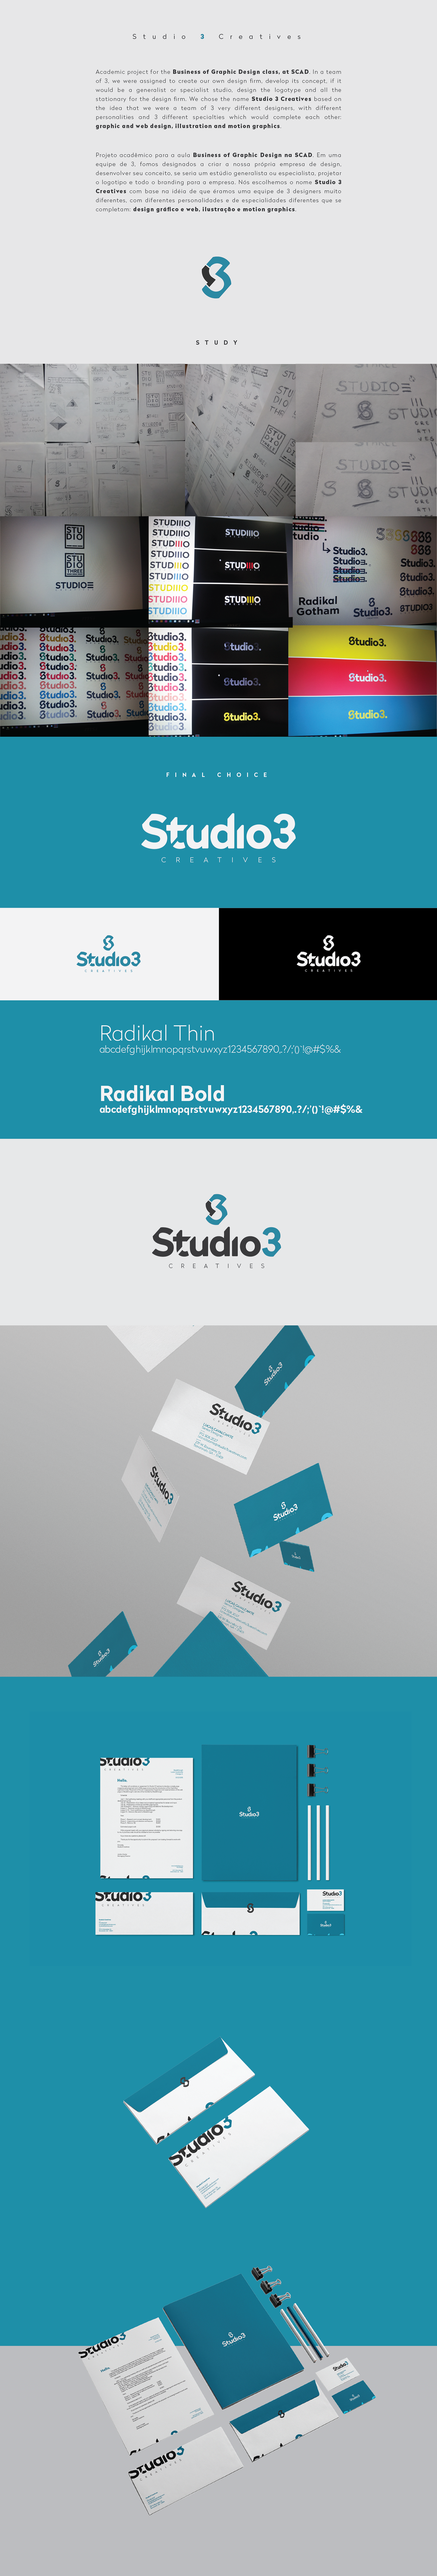 studio3 creatives visual identity SCAD business Savannah grds376 design firm